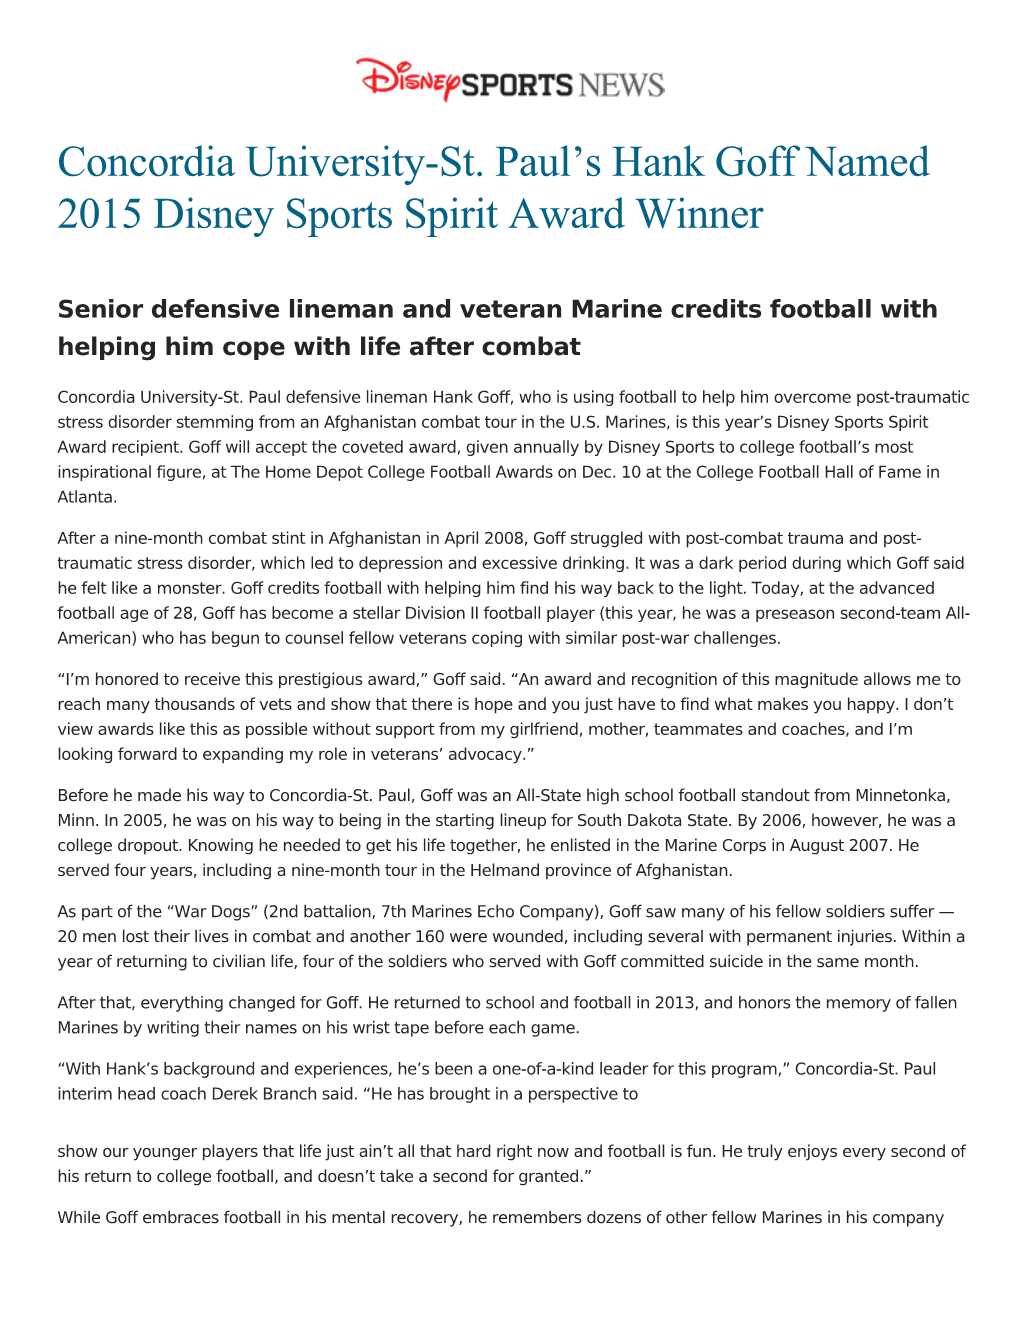 Concordia University-St. Paul's Hank Goff Named 2015 Disney Sports